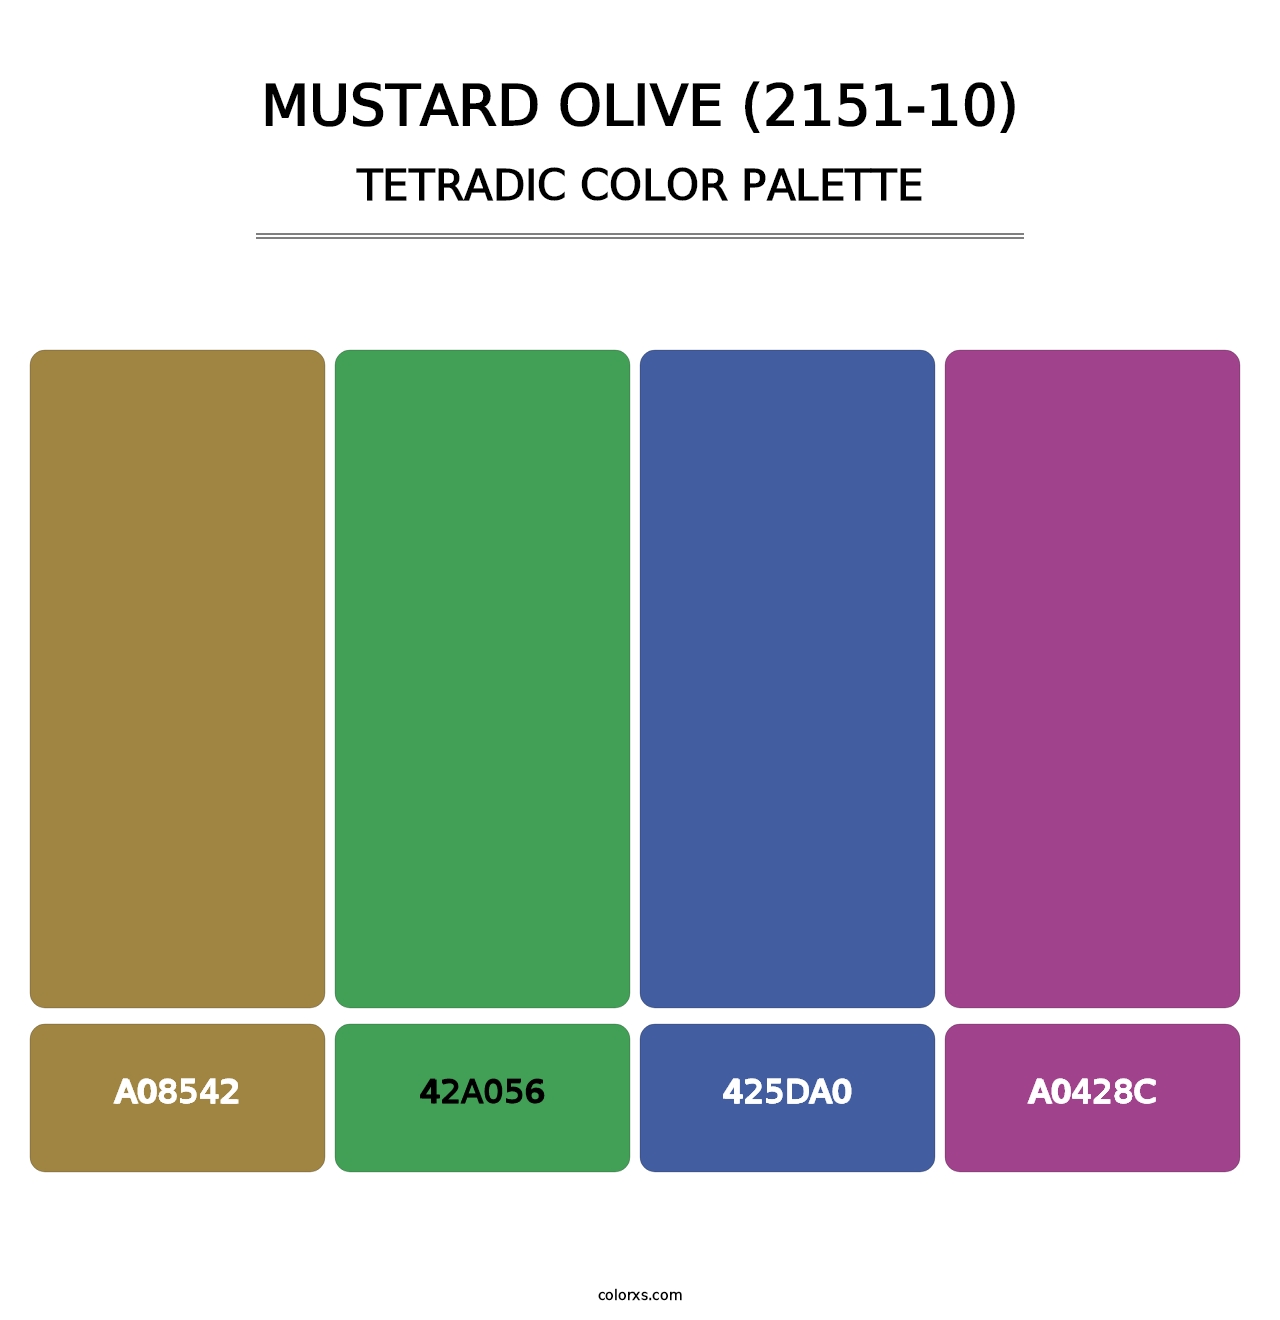 Mustard Olive (2151-10) - Tetradic Color Palette